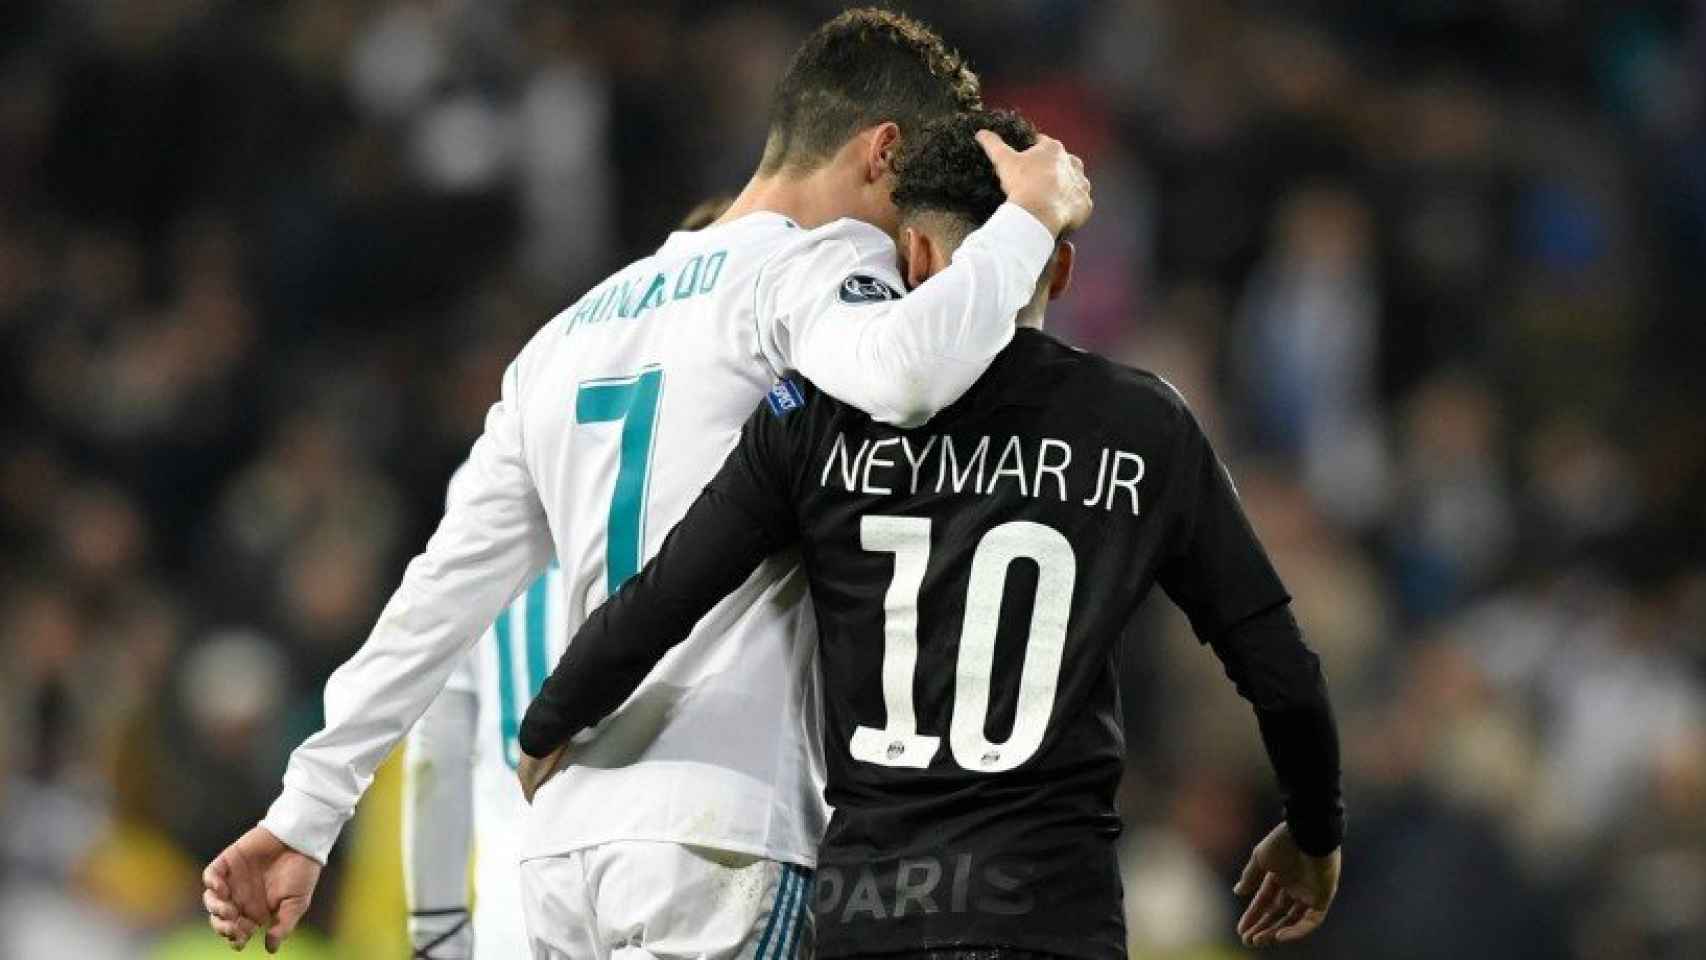 Cristiano y Neymar hablan. Foto Twitter (@ChampionsLeague)